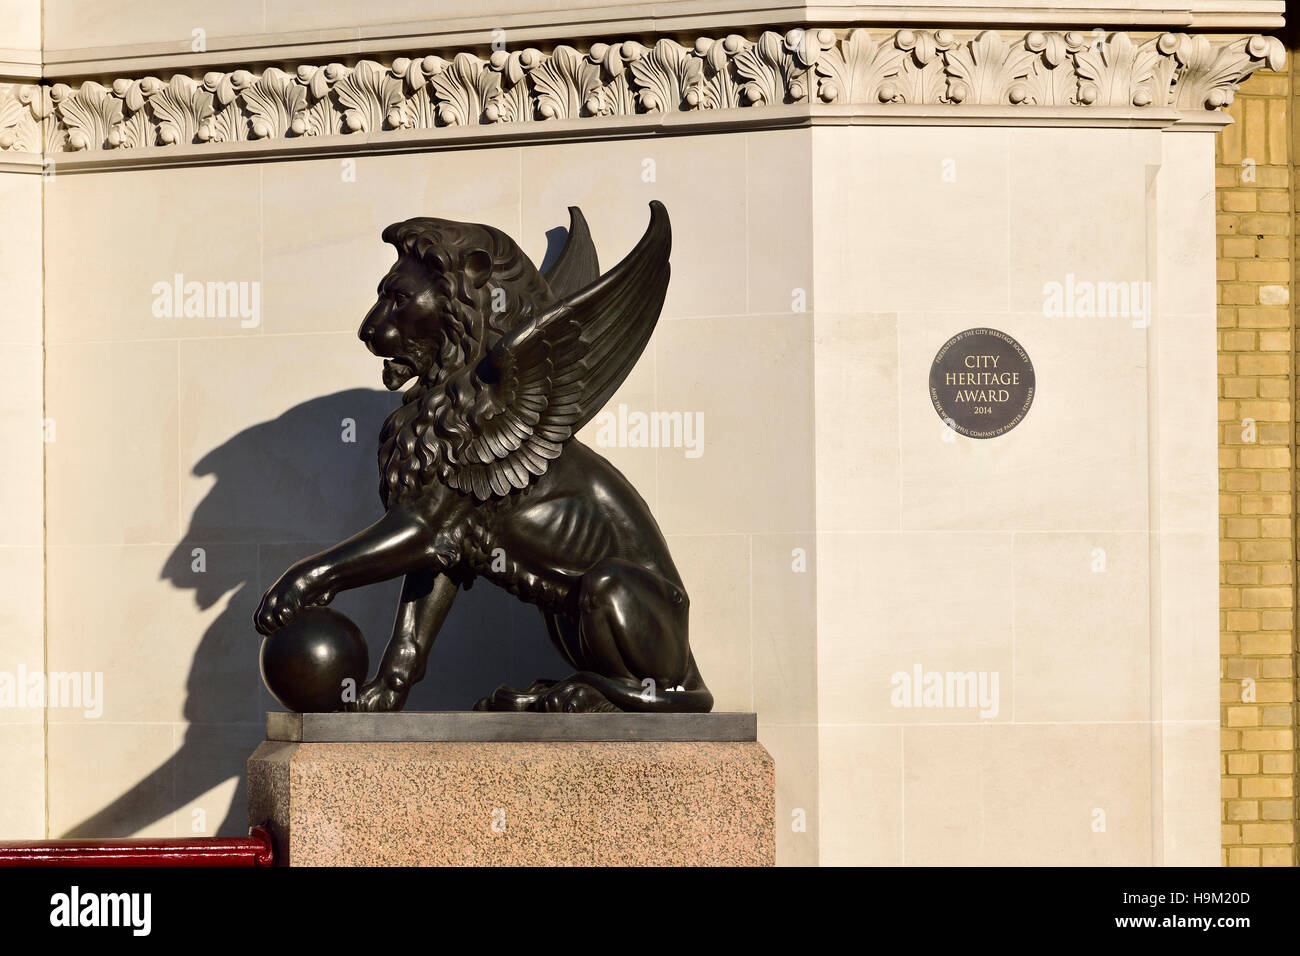 London, England, UK. Holborn Viaduct - bronze winged lion sculpture (Henry Bursill)  and City Heritage Award plaque Stock Photo